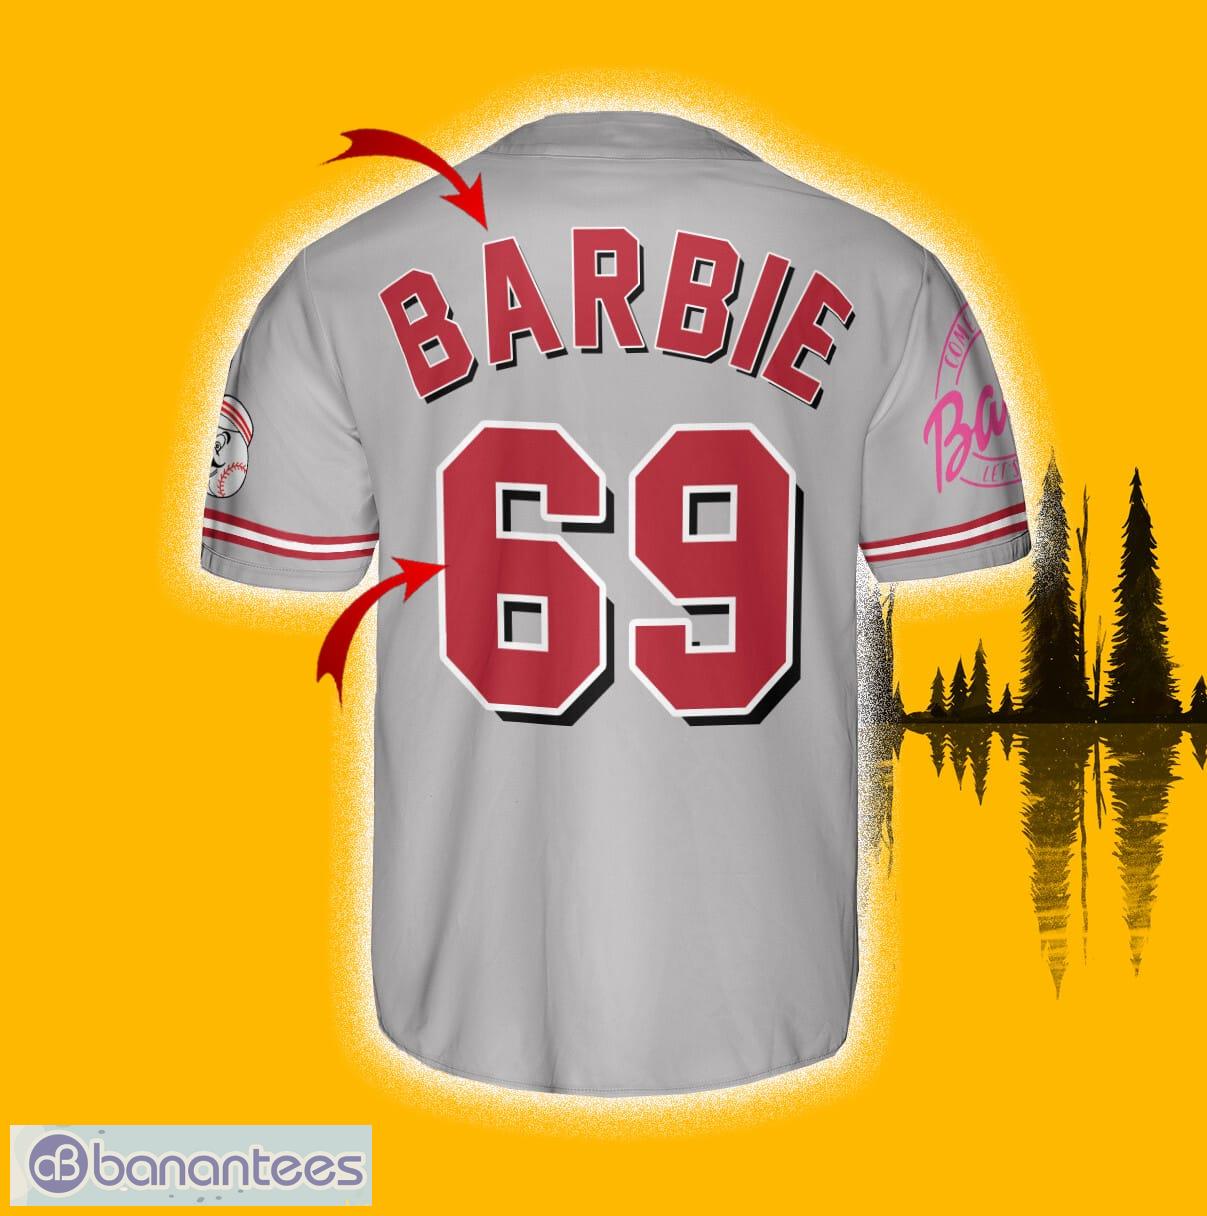 Cincinnati Reds Barbie CT Baseball Jersey Shirt Custom Number And